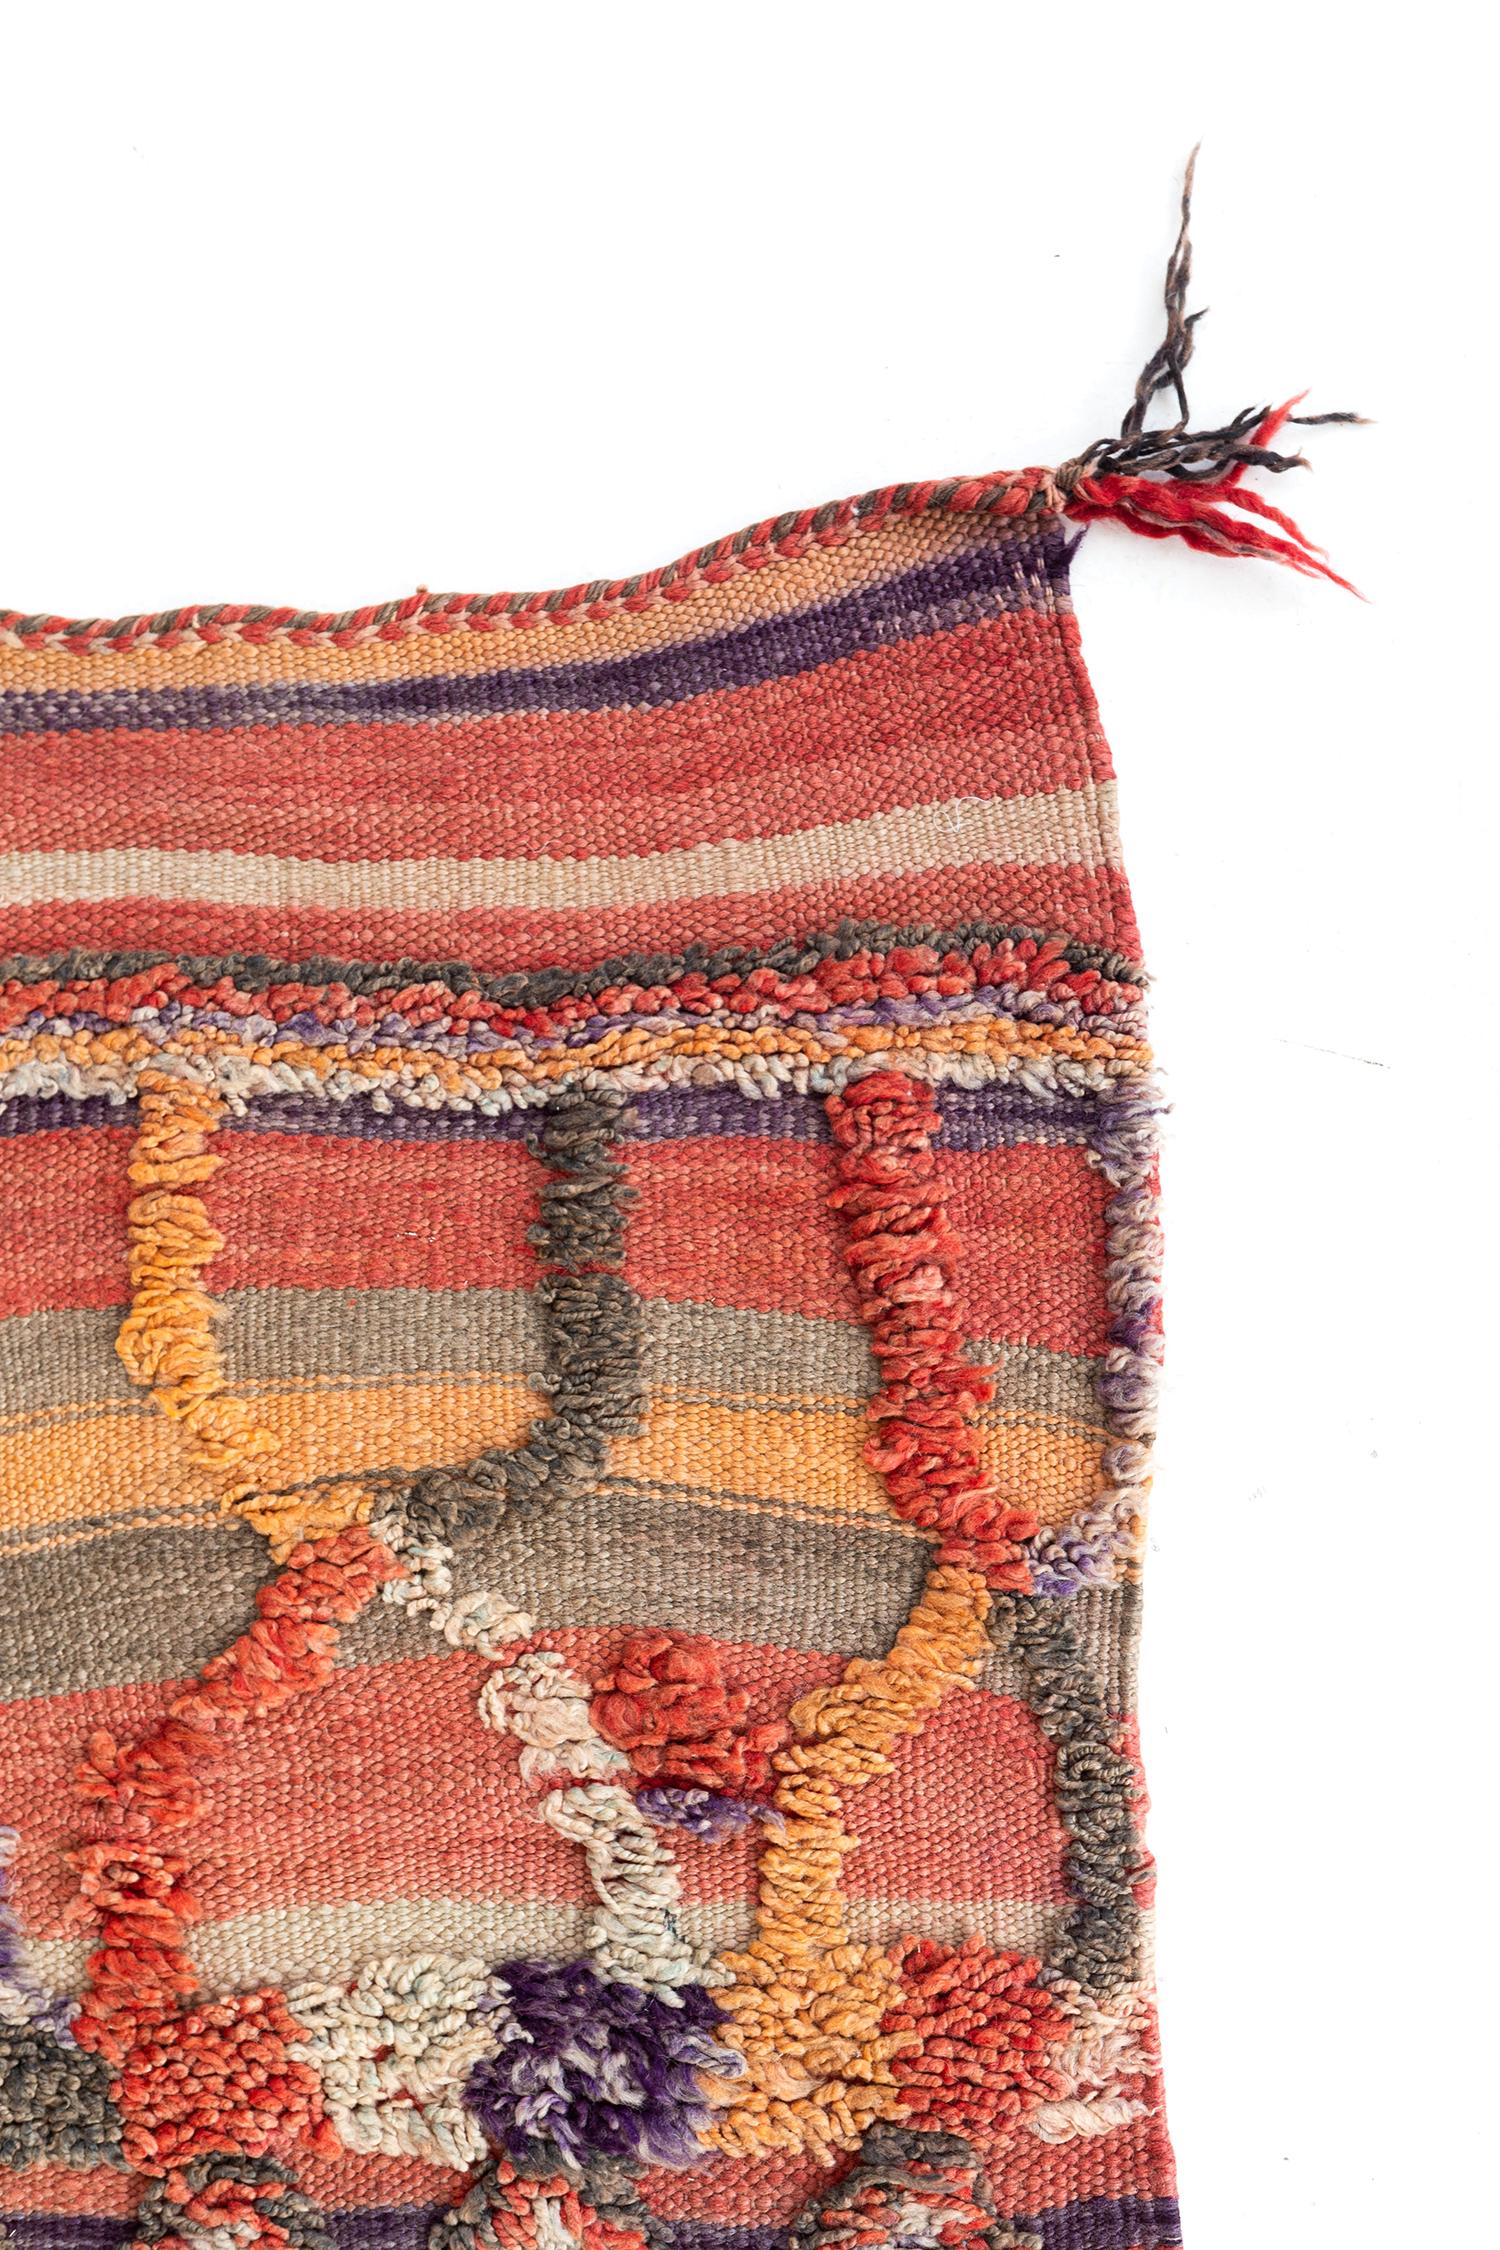 Vintage Style Moroccan Tribal Embossed Kilim For Sale 2